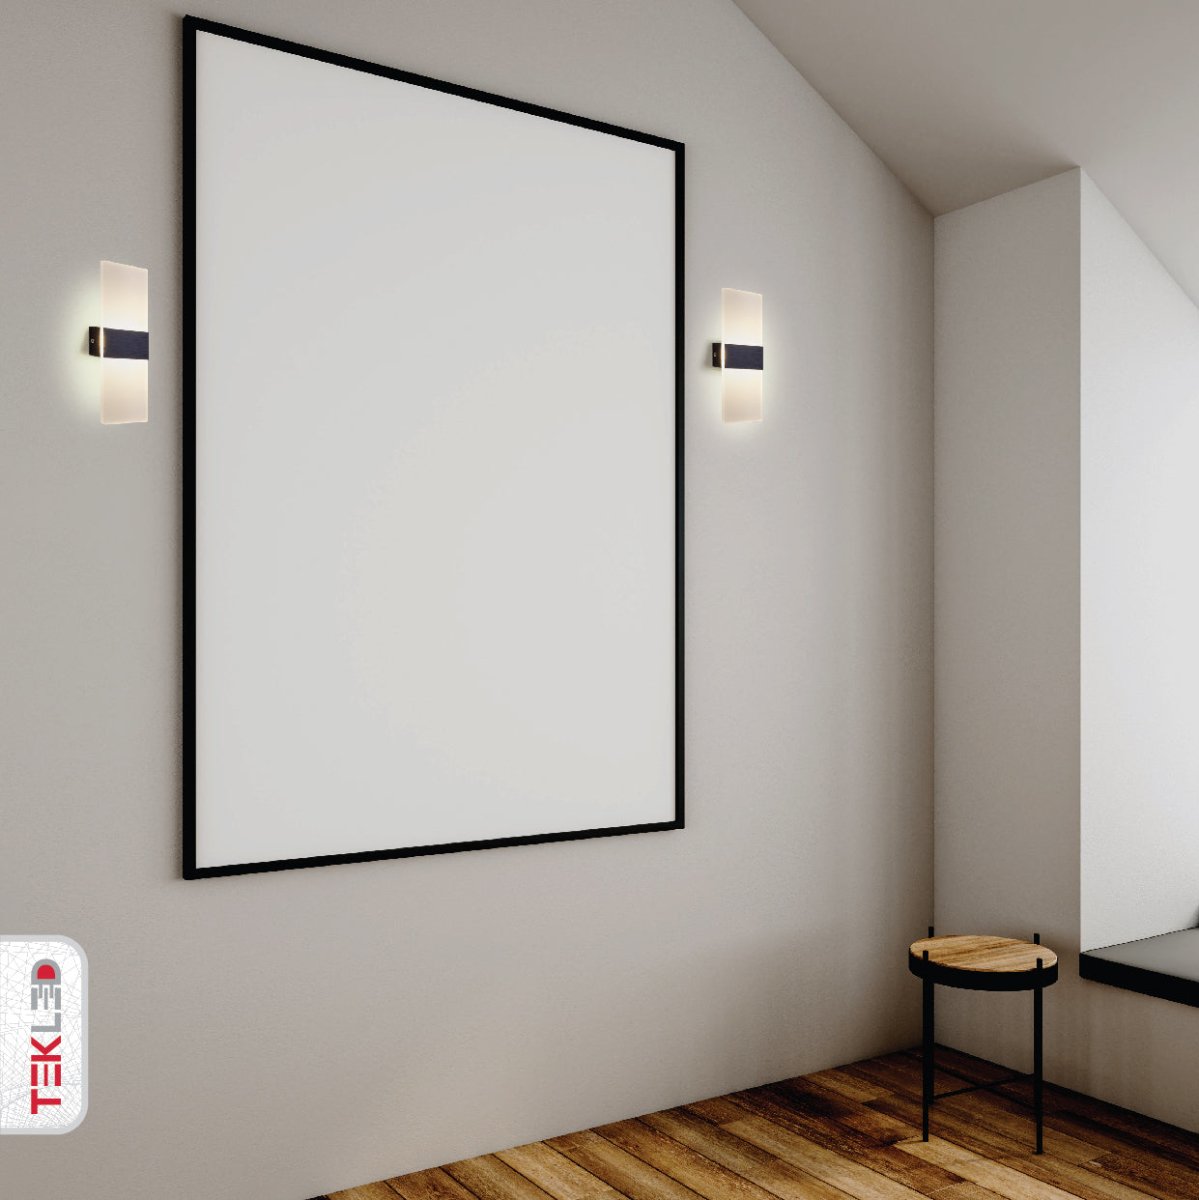 More interior usage of LED Dark Wood Metal Acrylic Wall Light 4W Cool White 4000K | TEKLED 151-19622